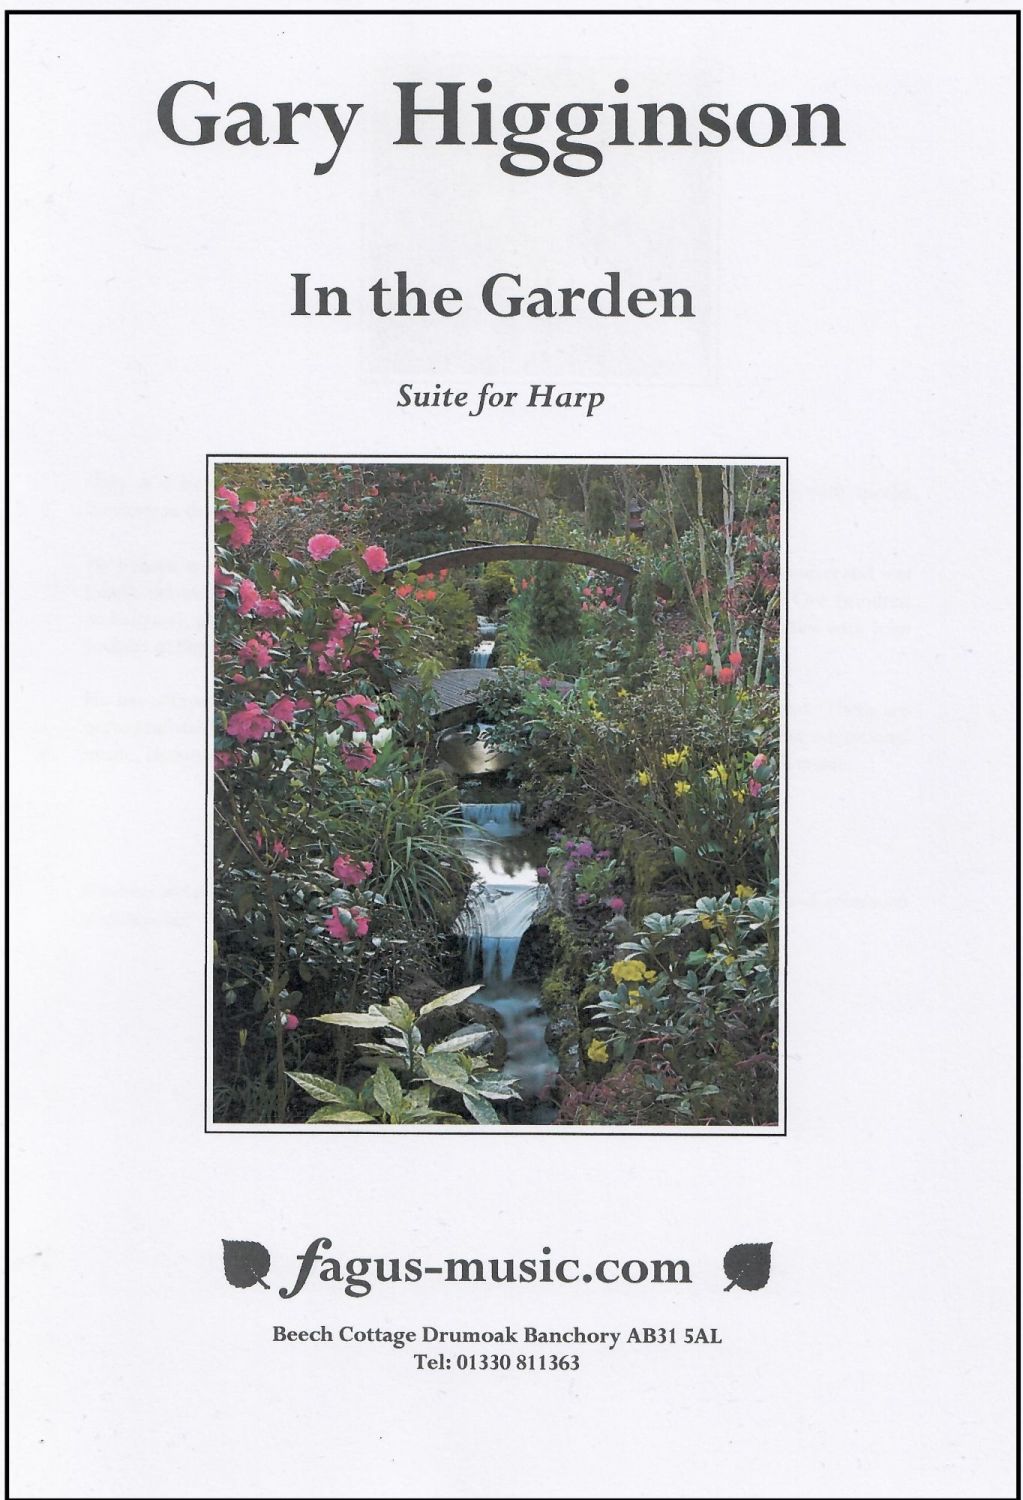 In the Garden - Gary Higginson